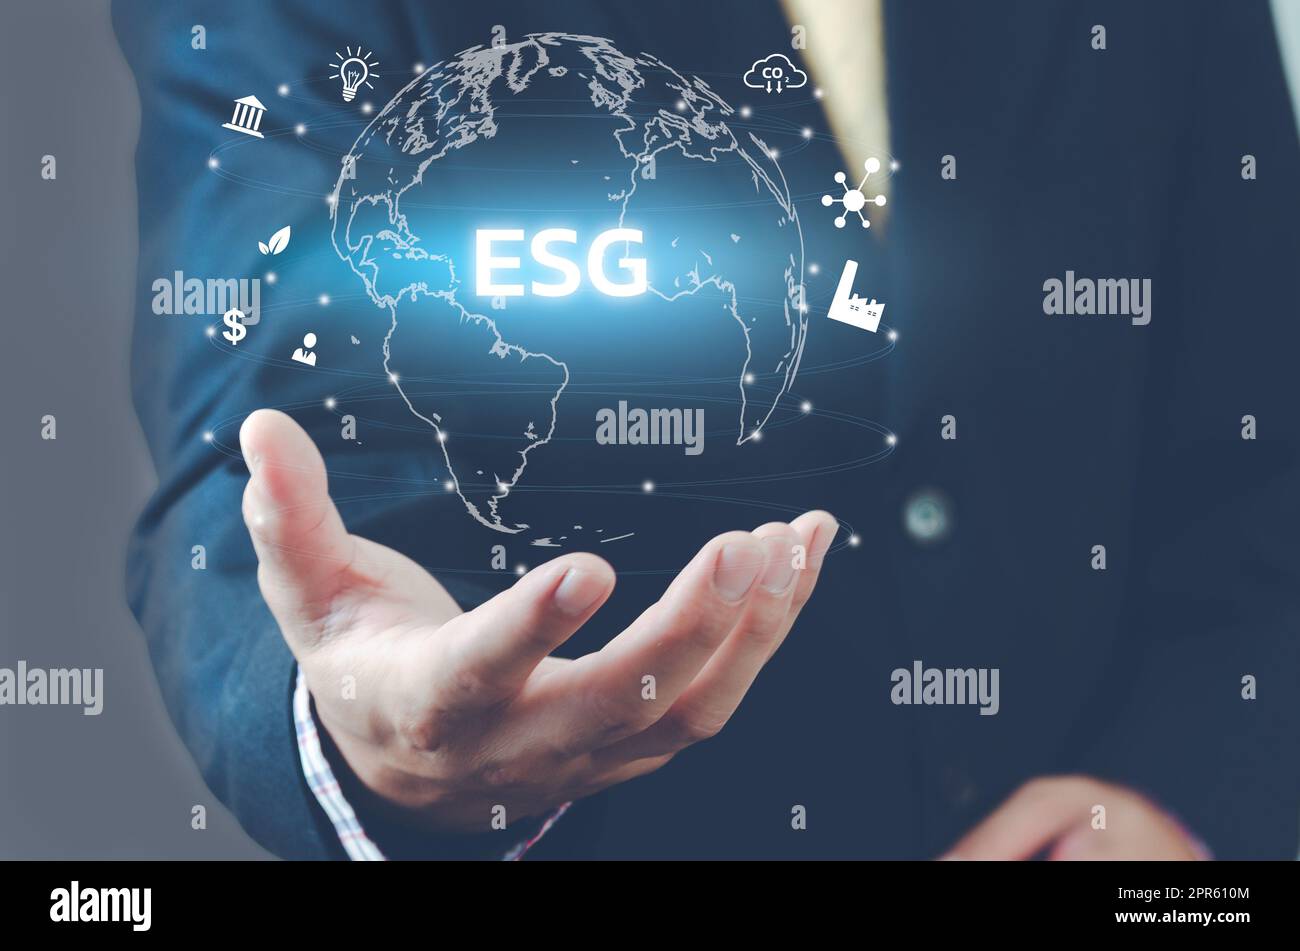 Man hand virtual world icon. ESG Environmental Social Governance icons and symbols virtual screen. Business concept. Stock Photo